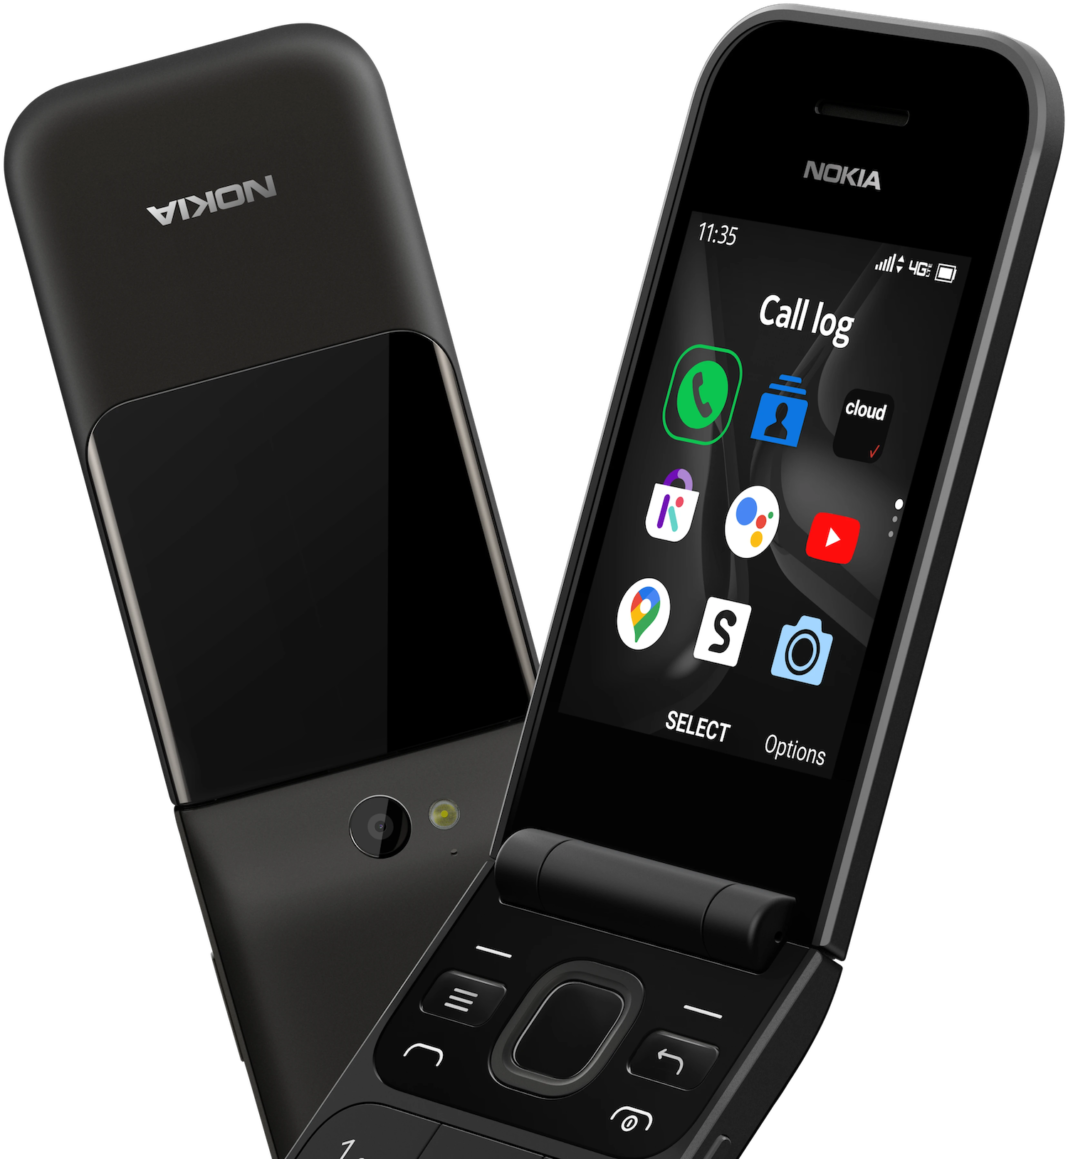 Nokia 2720 V Flip announced for 80; features KaiOS and Google